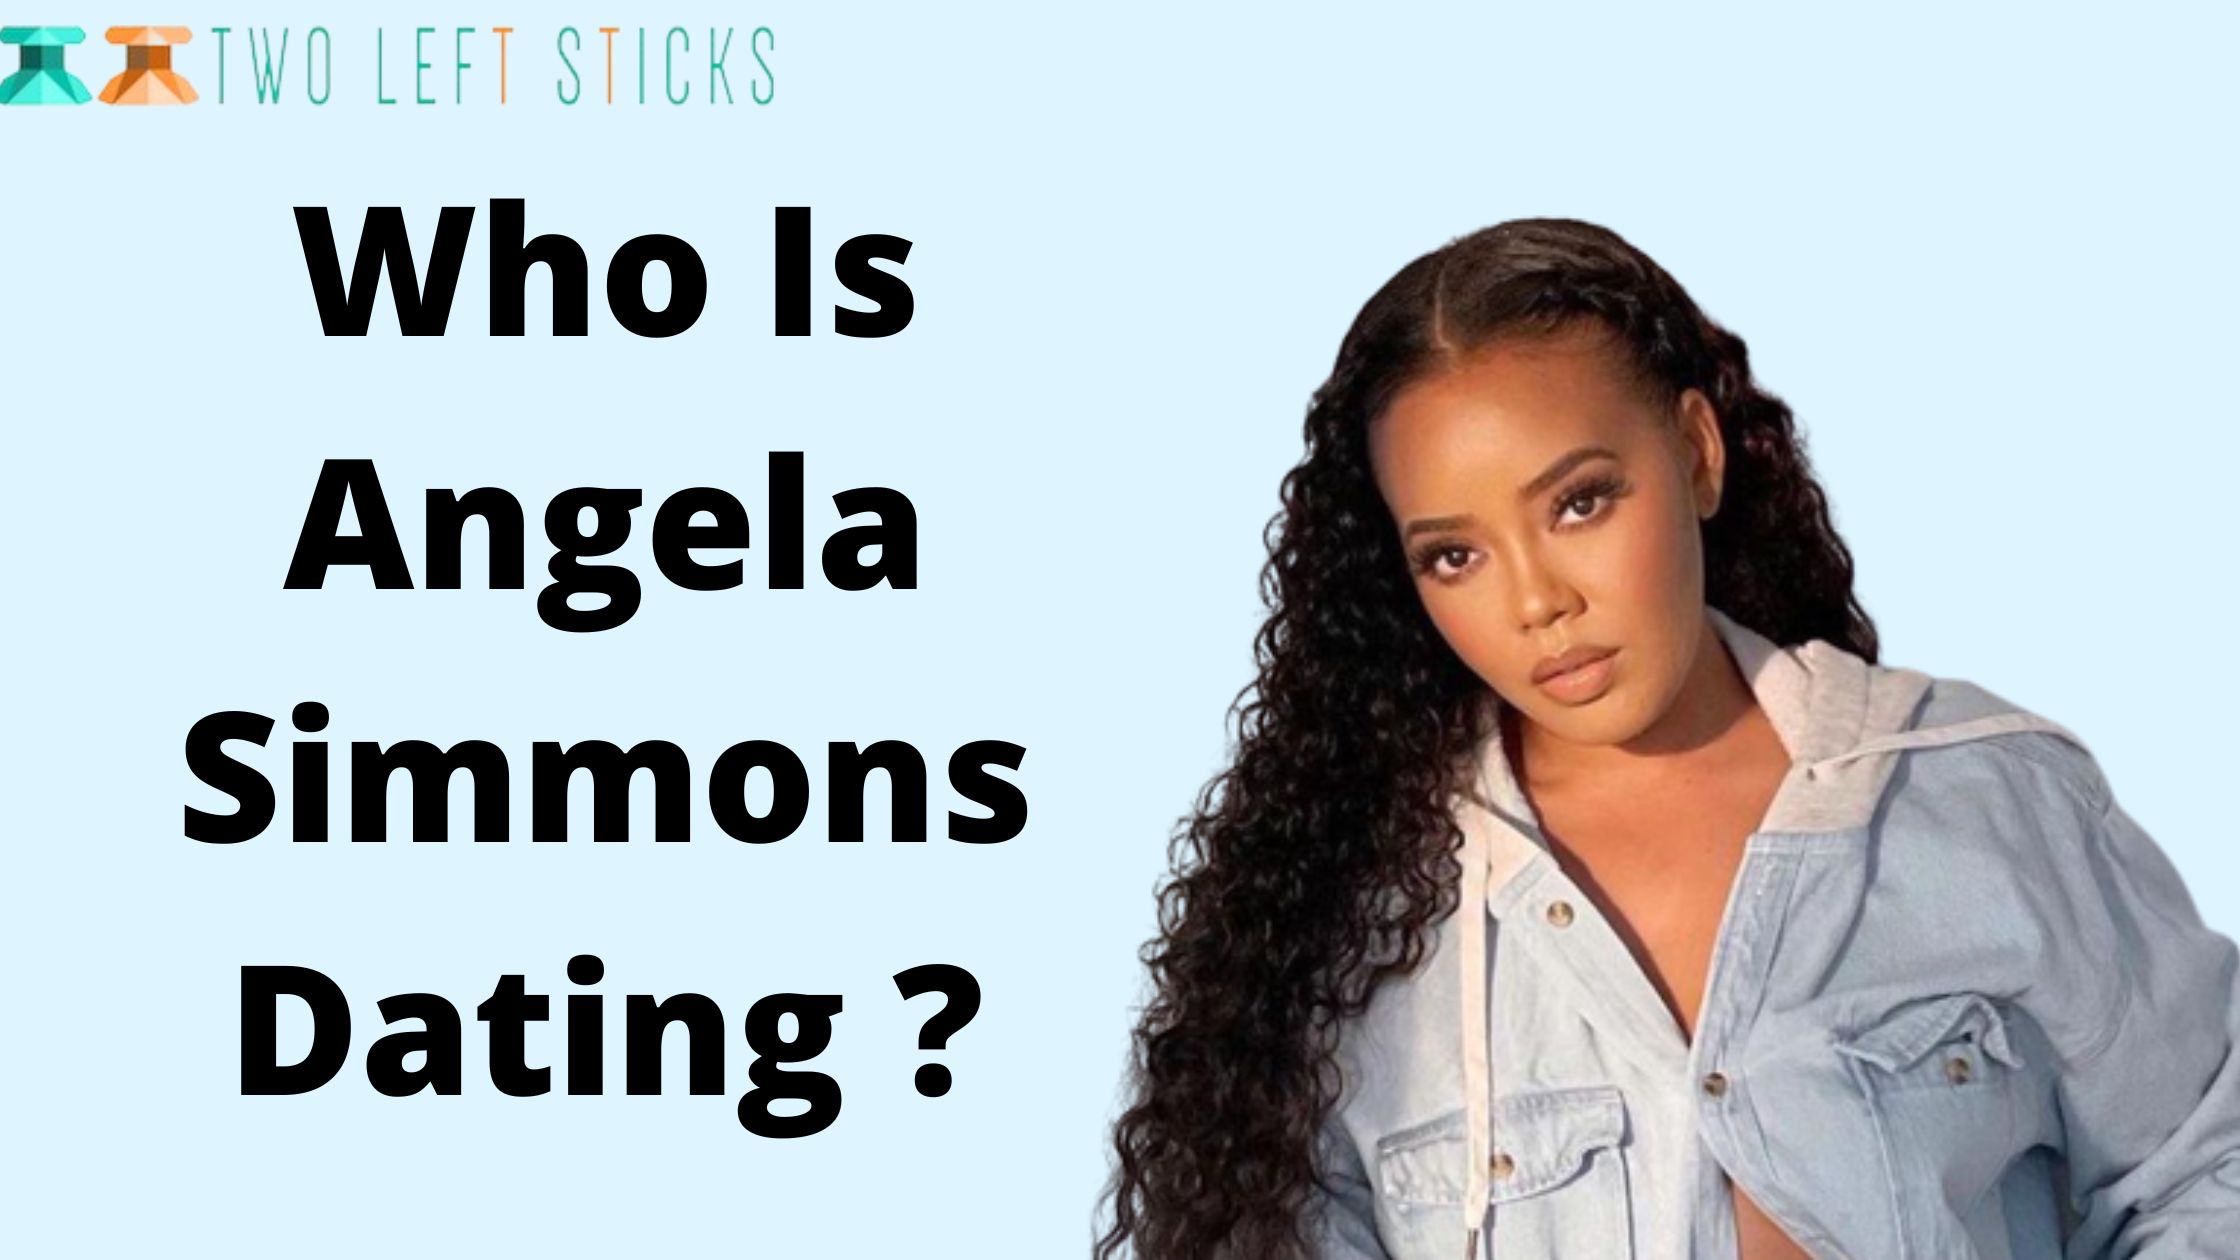 Angela-Simmons-dating-twoleftsticks(1)